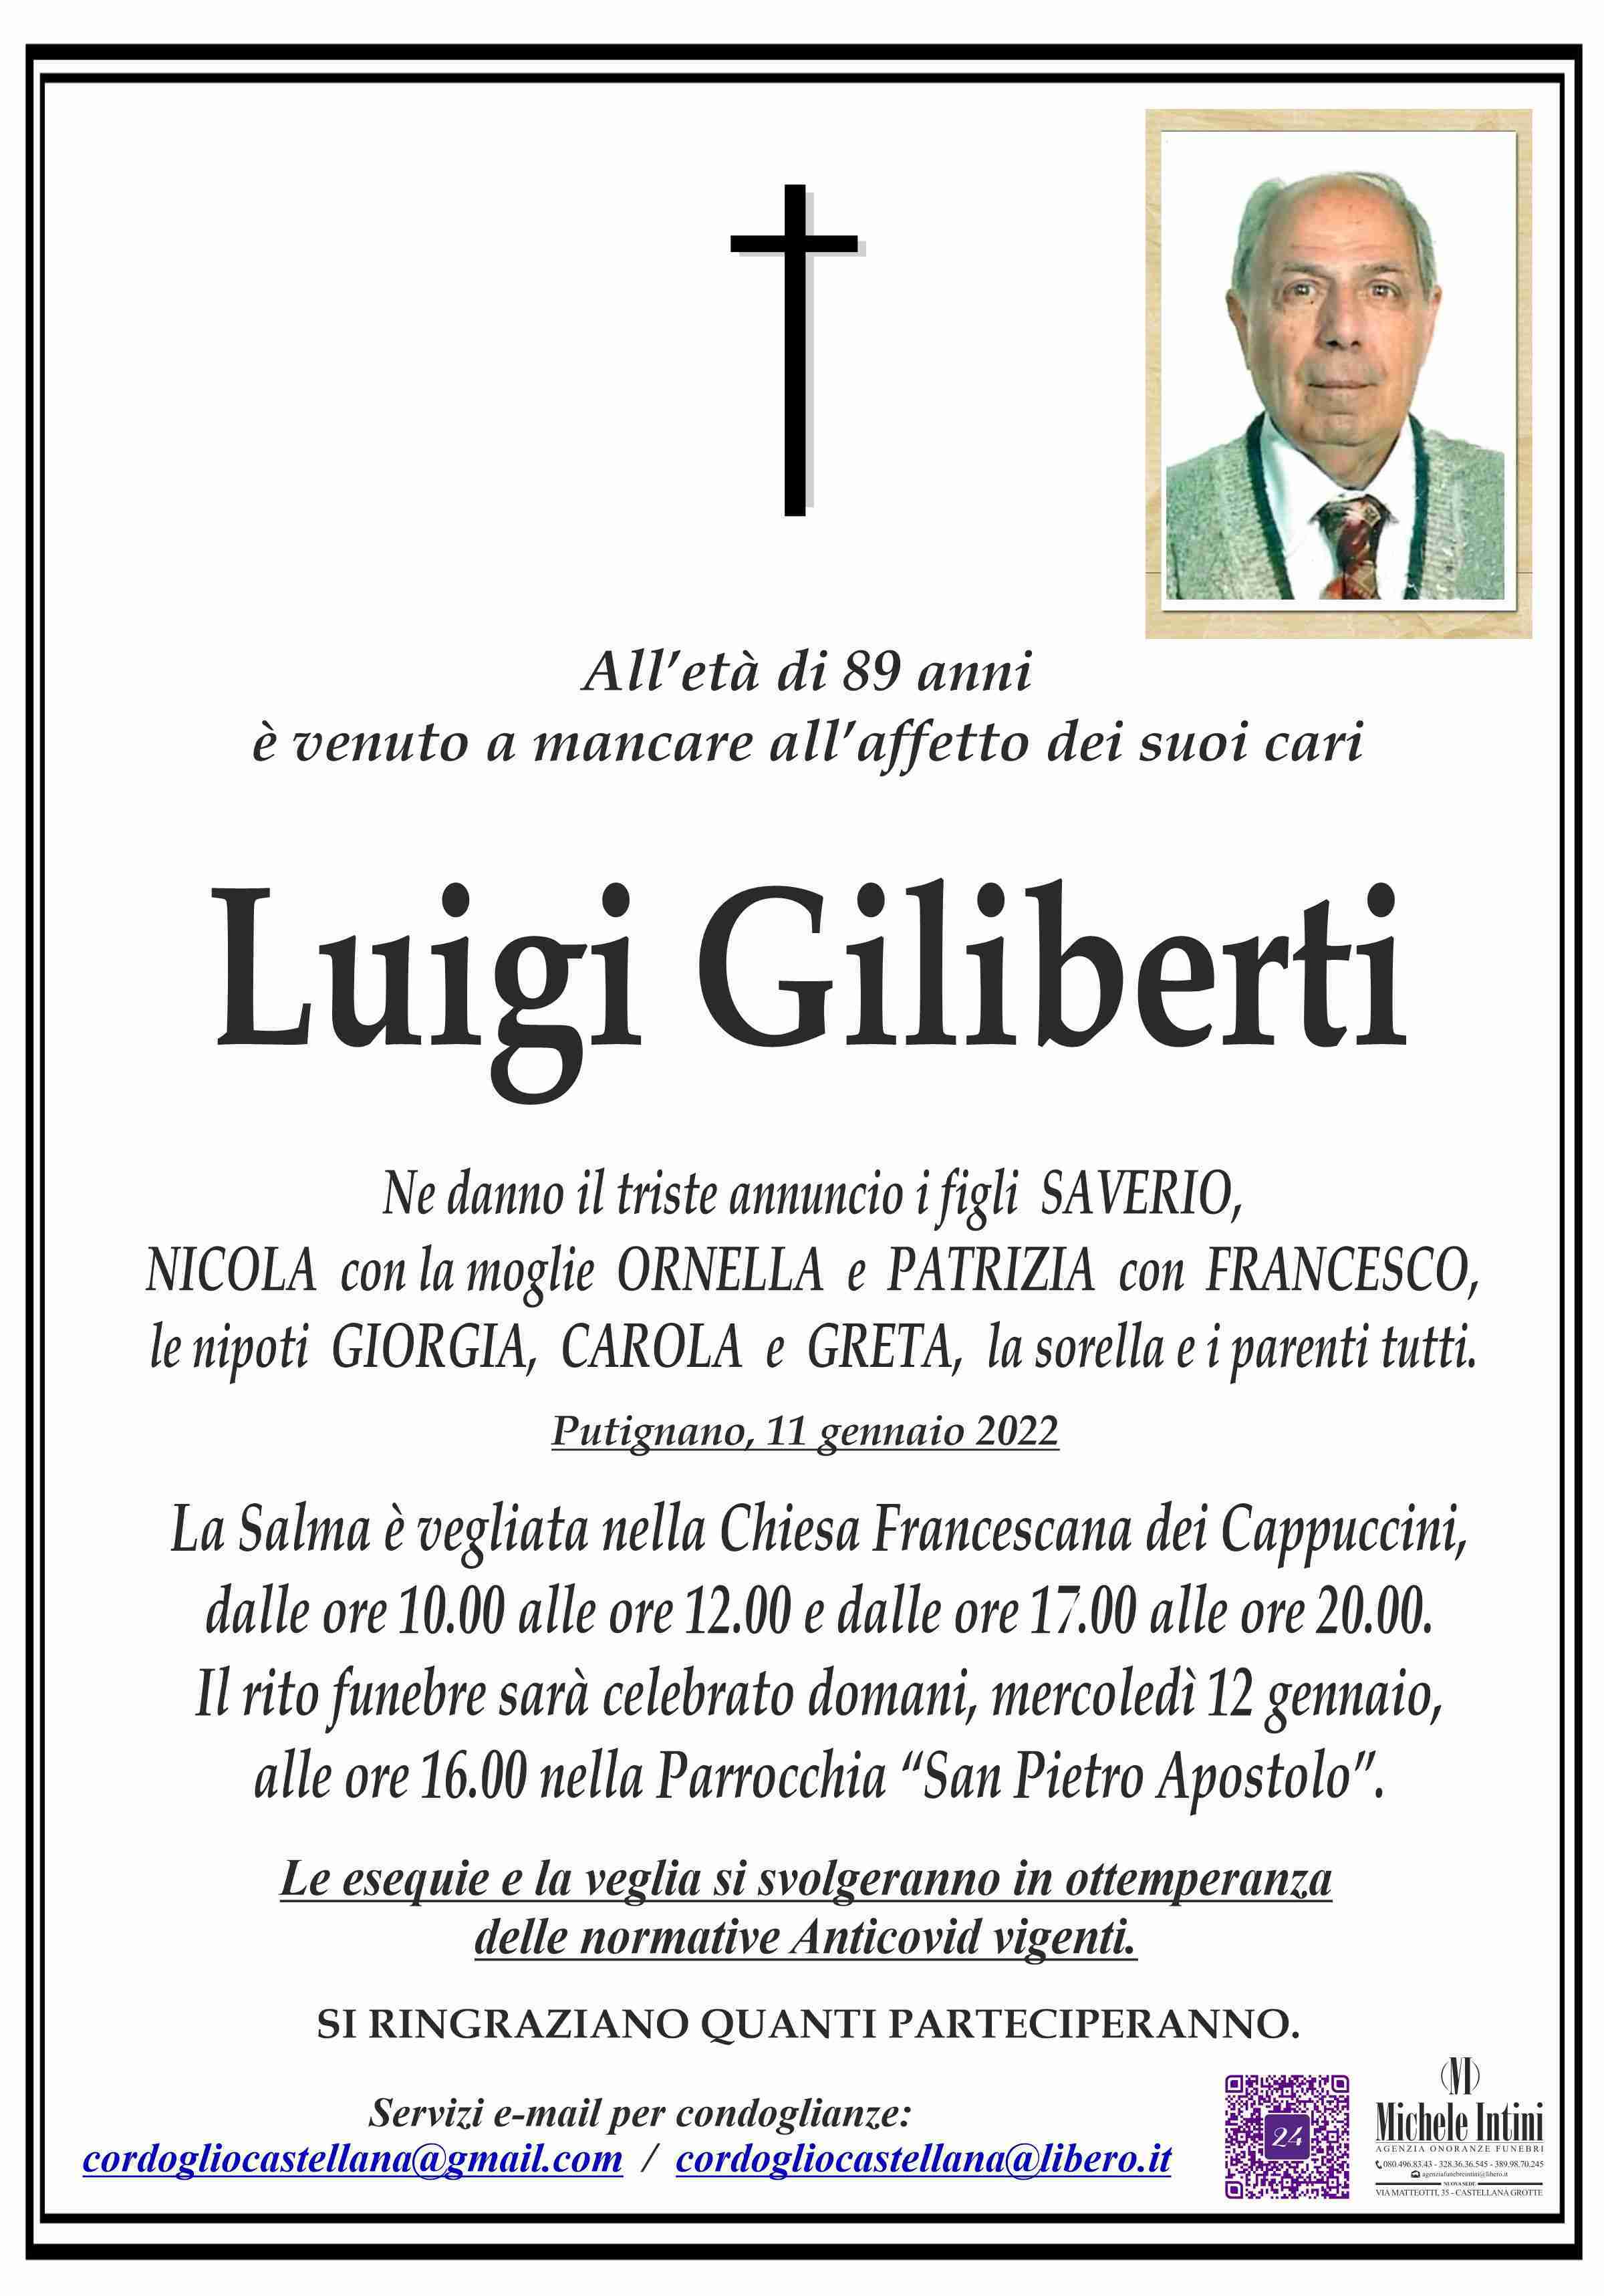 Luigi Giliberti